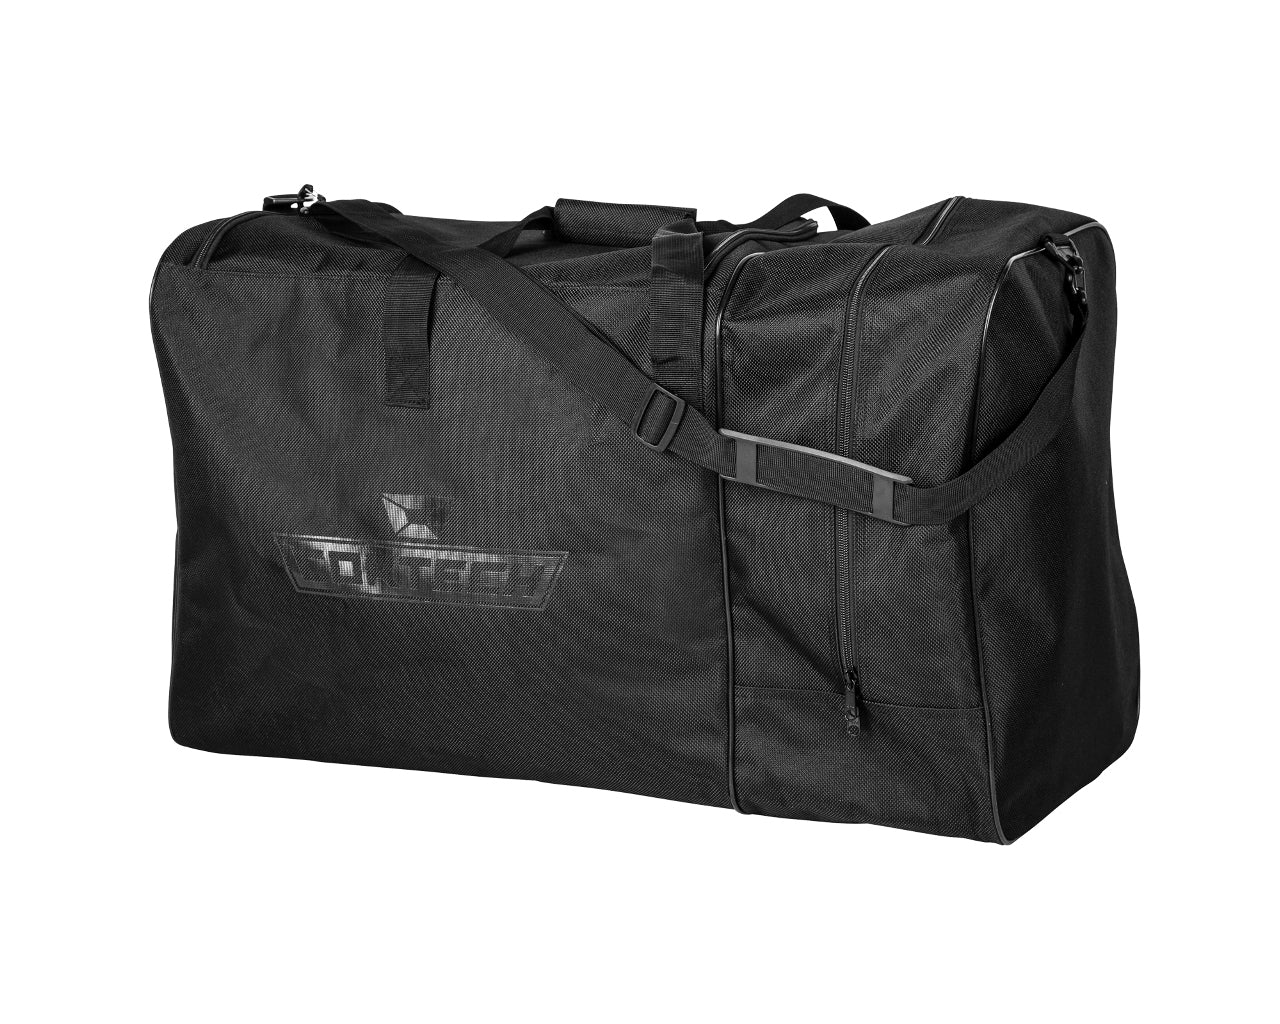 Cortech Day Tripper Gear Bag 28" x 18" x 14" 8216-0205-05